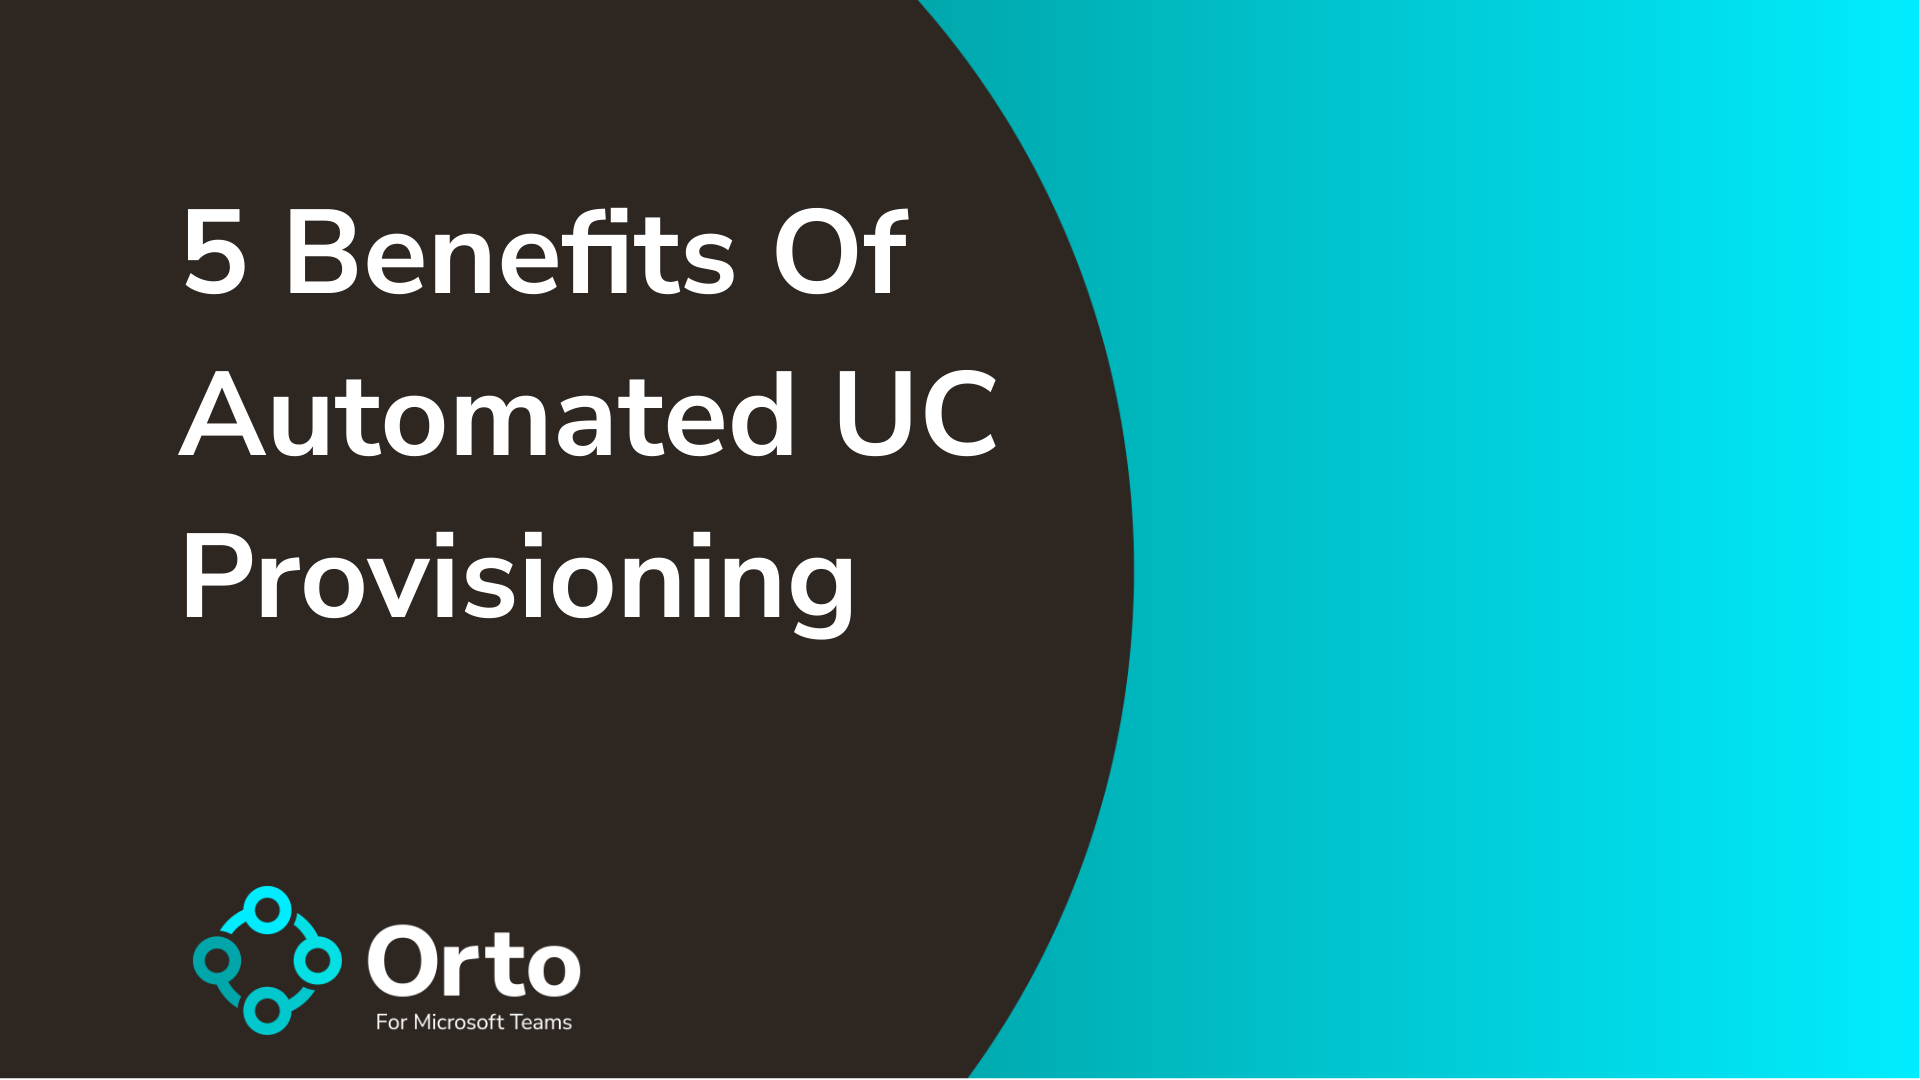 5 Benefits Of Automated UC Provisioning 5 Benefits Of Automated UC Provisioning 